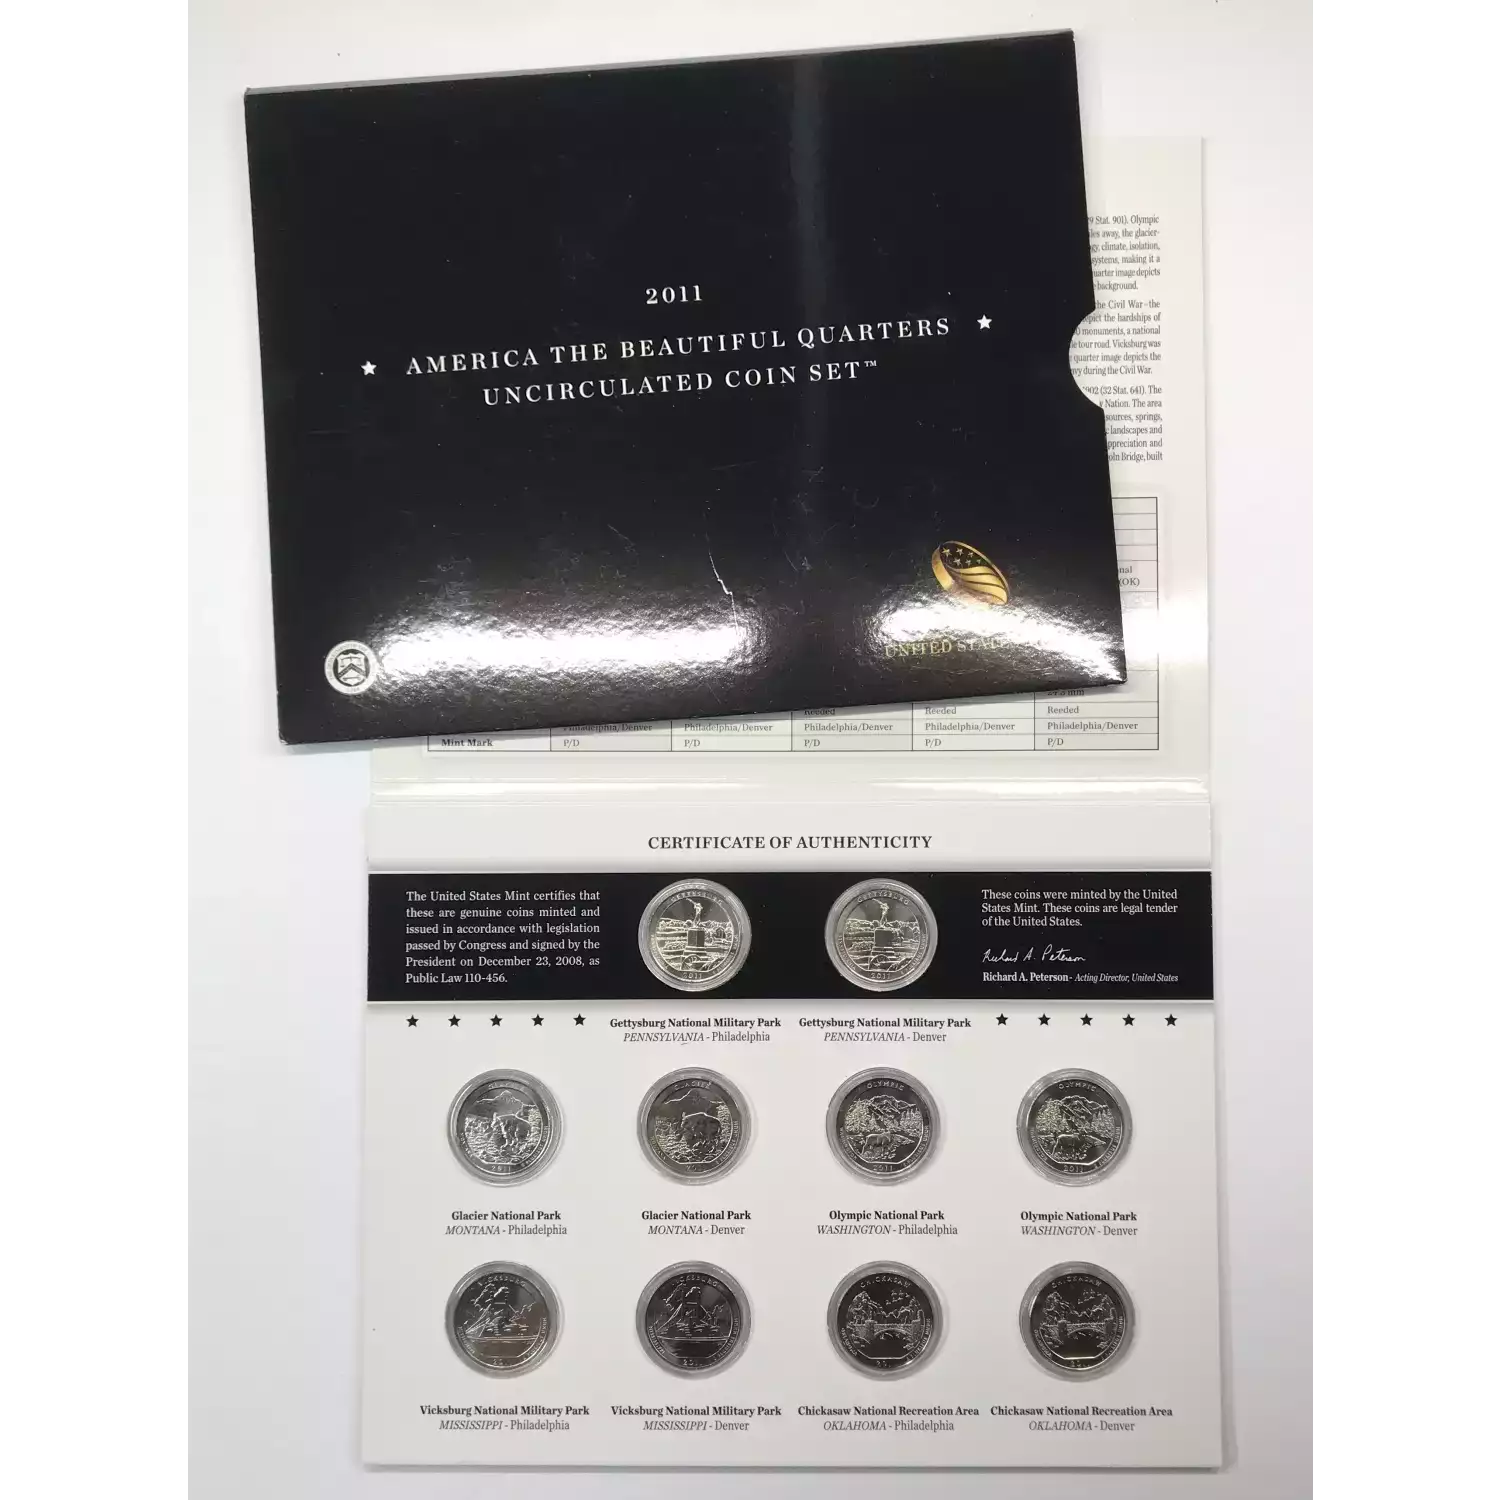 2011 America the Beautiful ATB Quarters Uncirculated 10-Coin P&D Set US Mint OGP